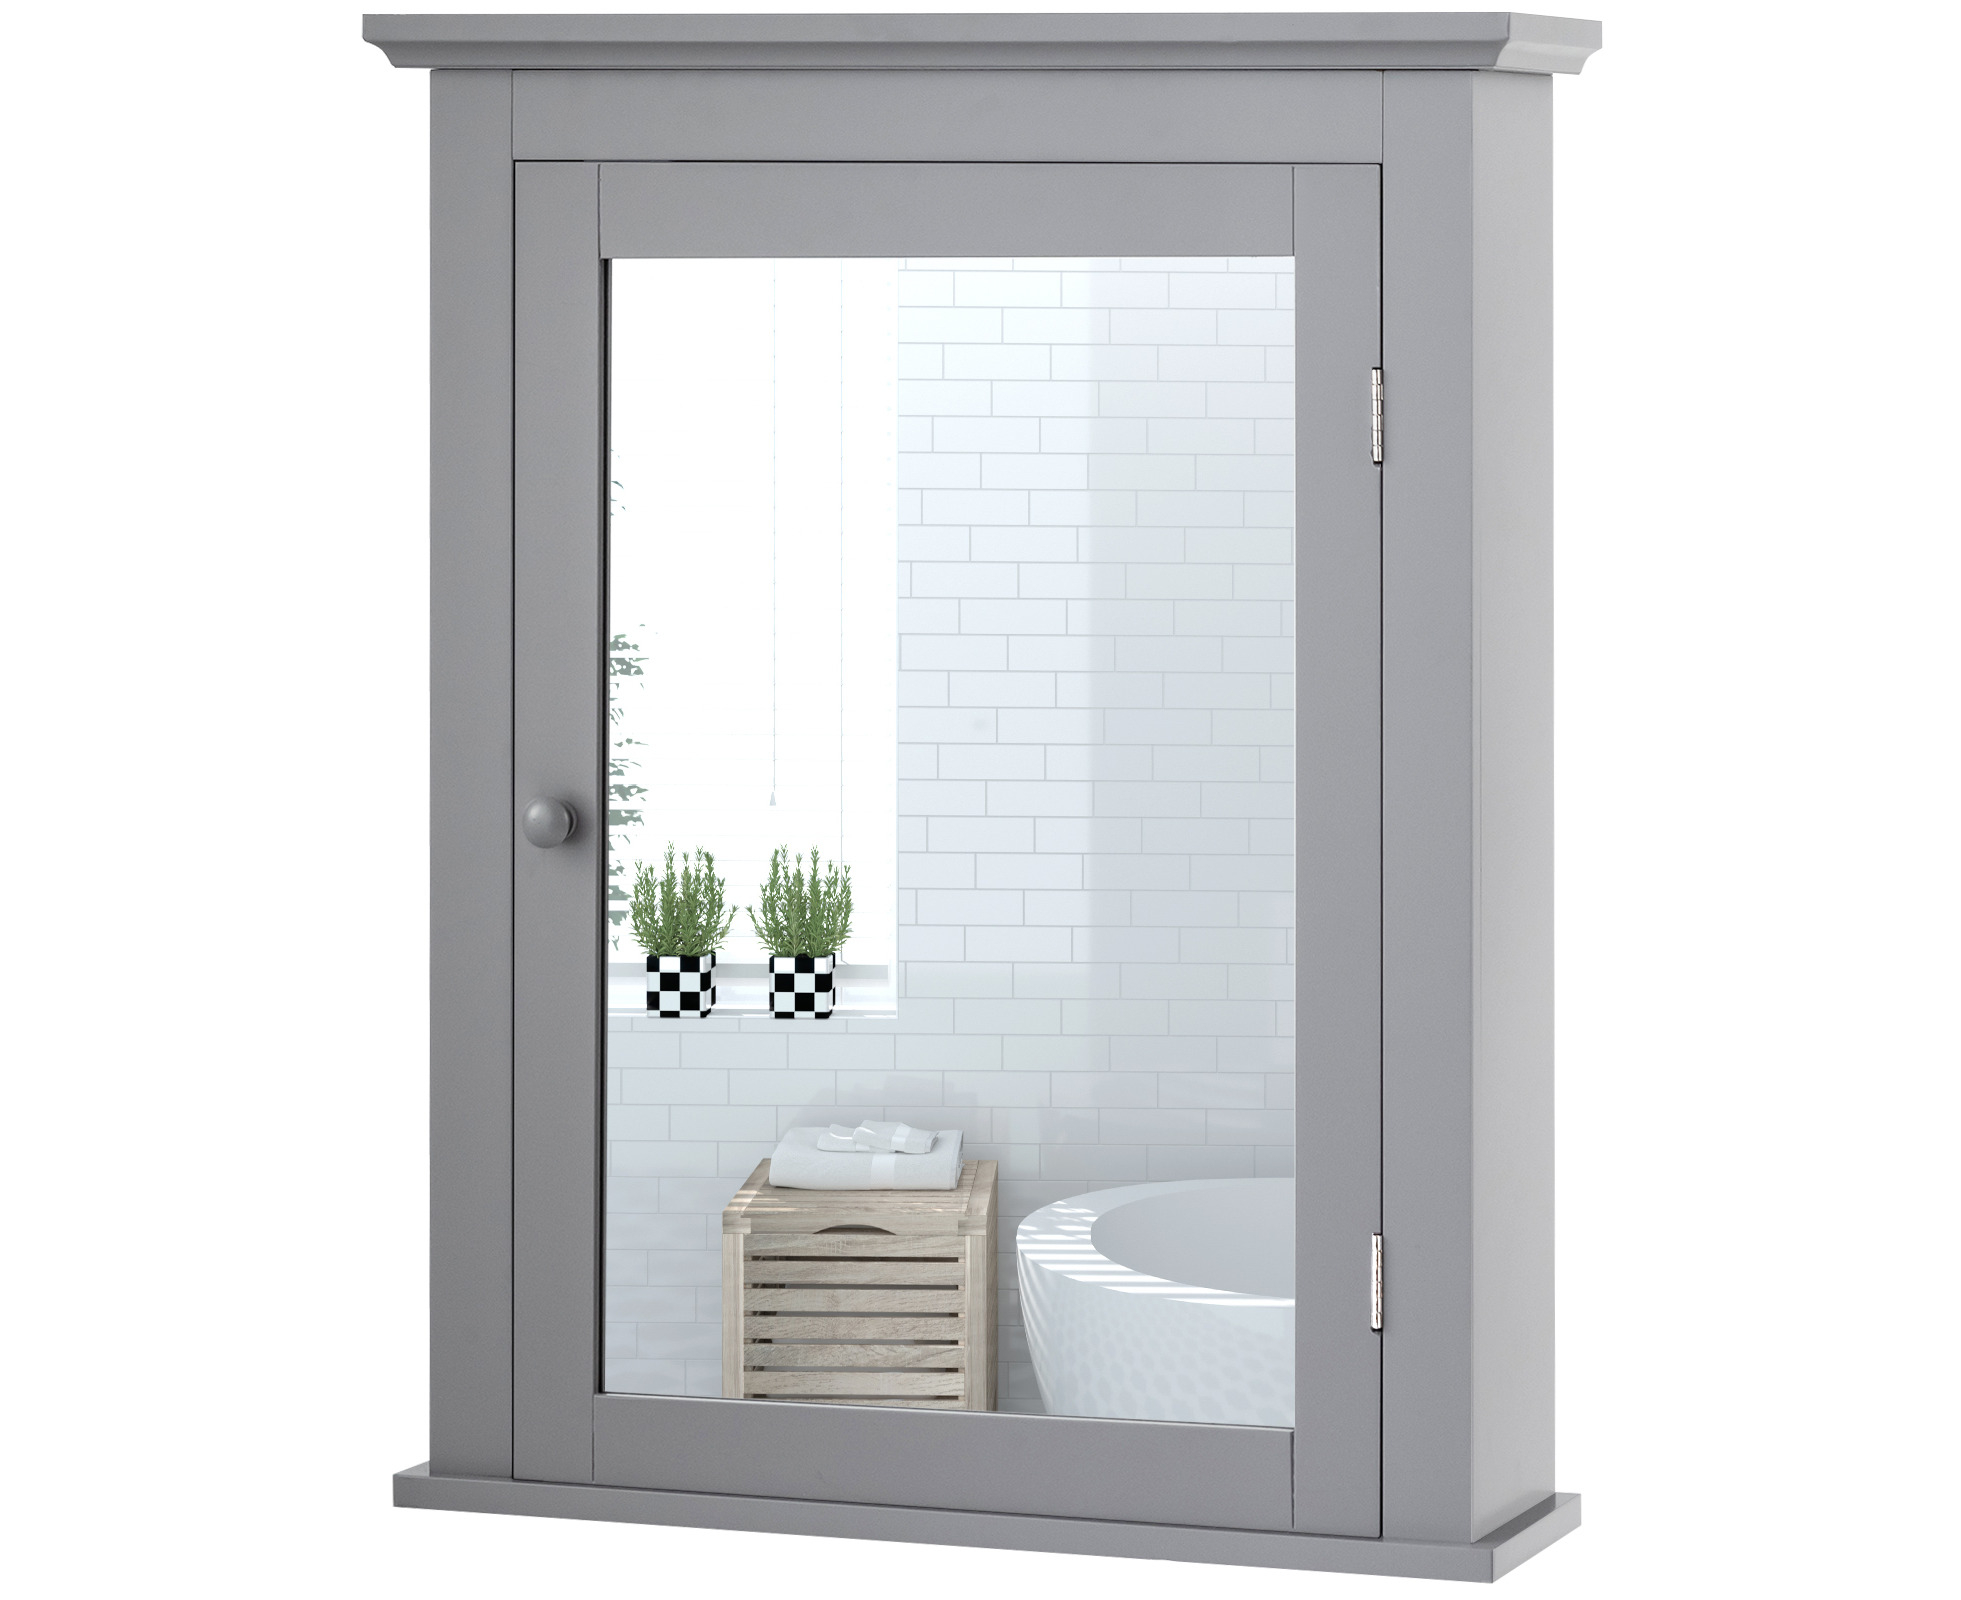 Giantex Bathroom Medicine Cabinet with Mirror, Wall Mounted